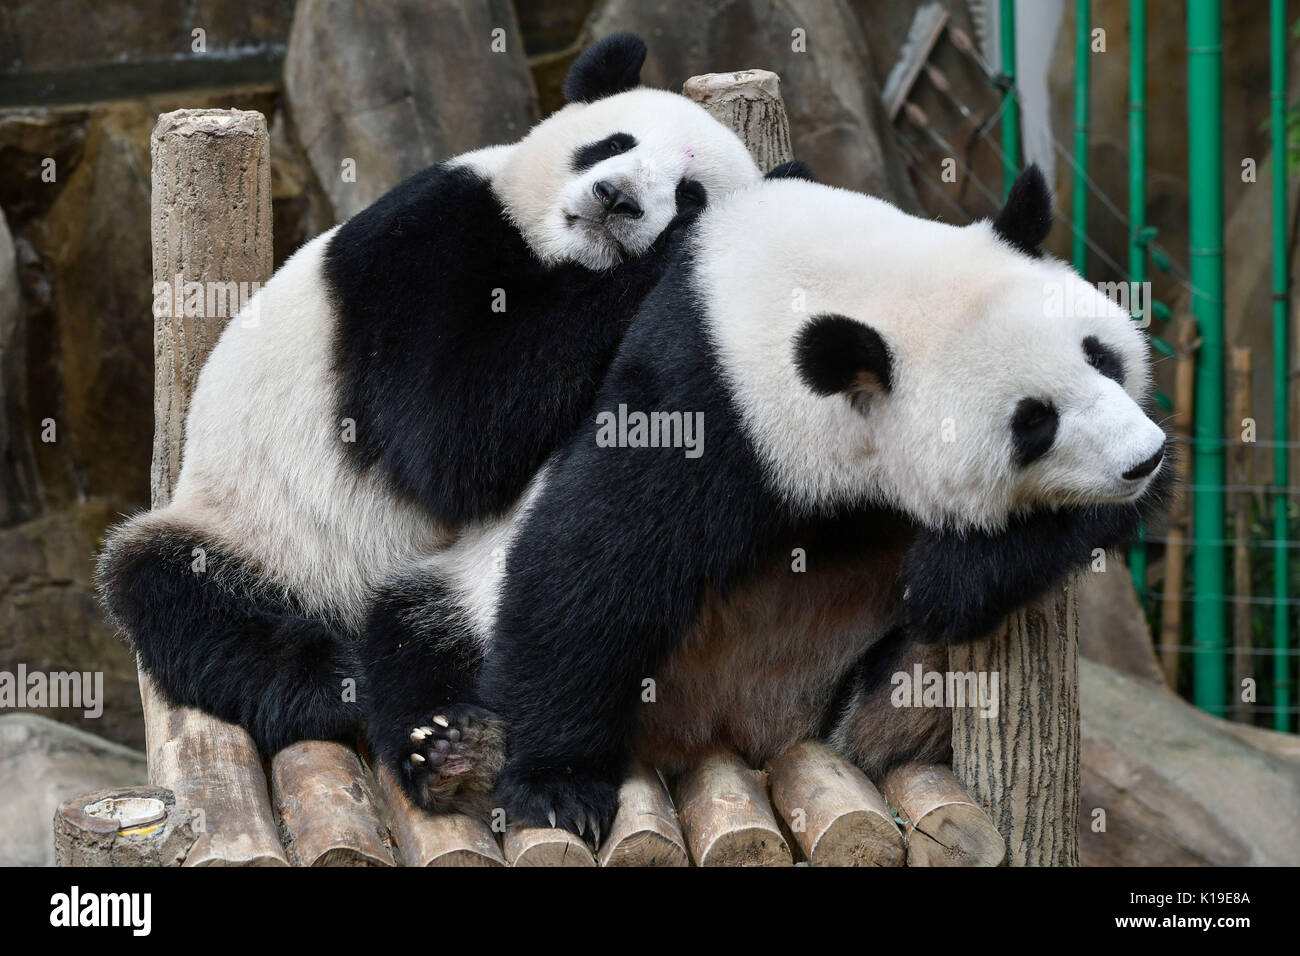 Beijing, Malaysia. 23rd Aug, 2017. Giant pandas Liang Liang (R) and Nuan Nuan are seen at the National Zoo in Kuala Lumpur, Malaysia, Aug. 23, 2017. Credit: Chong Voon Chung/Xinhua/Alamy Live News Stock Photo